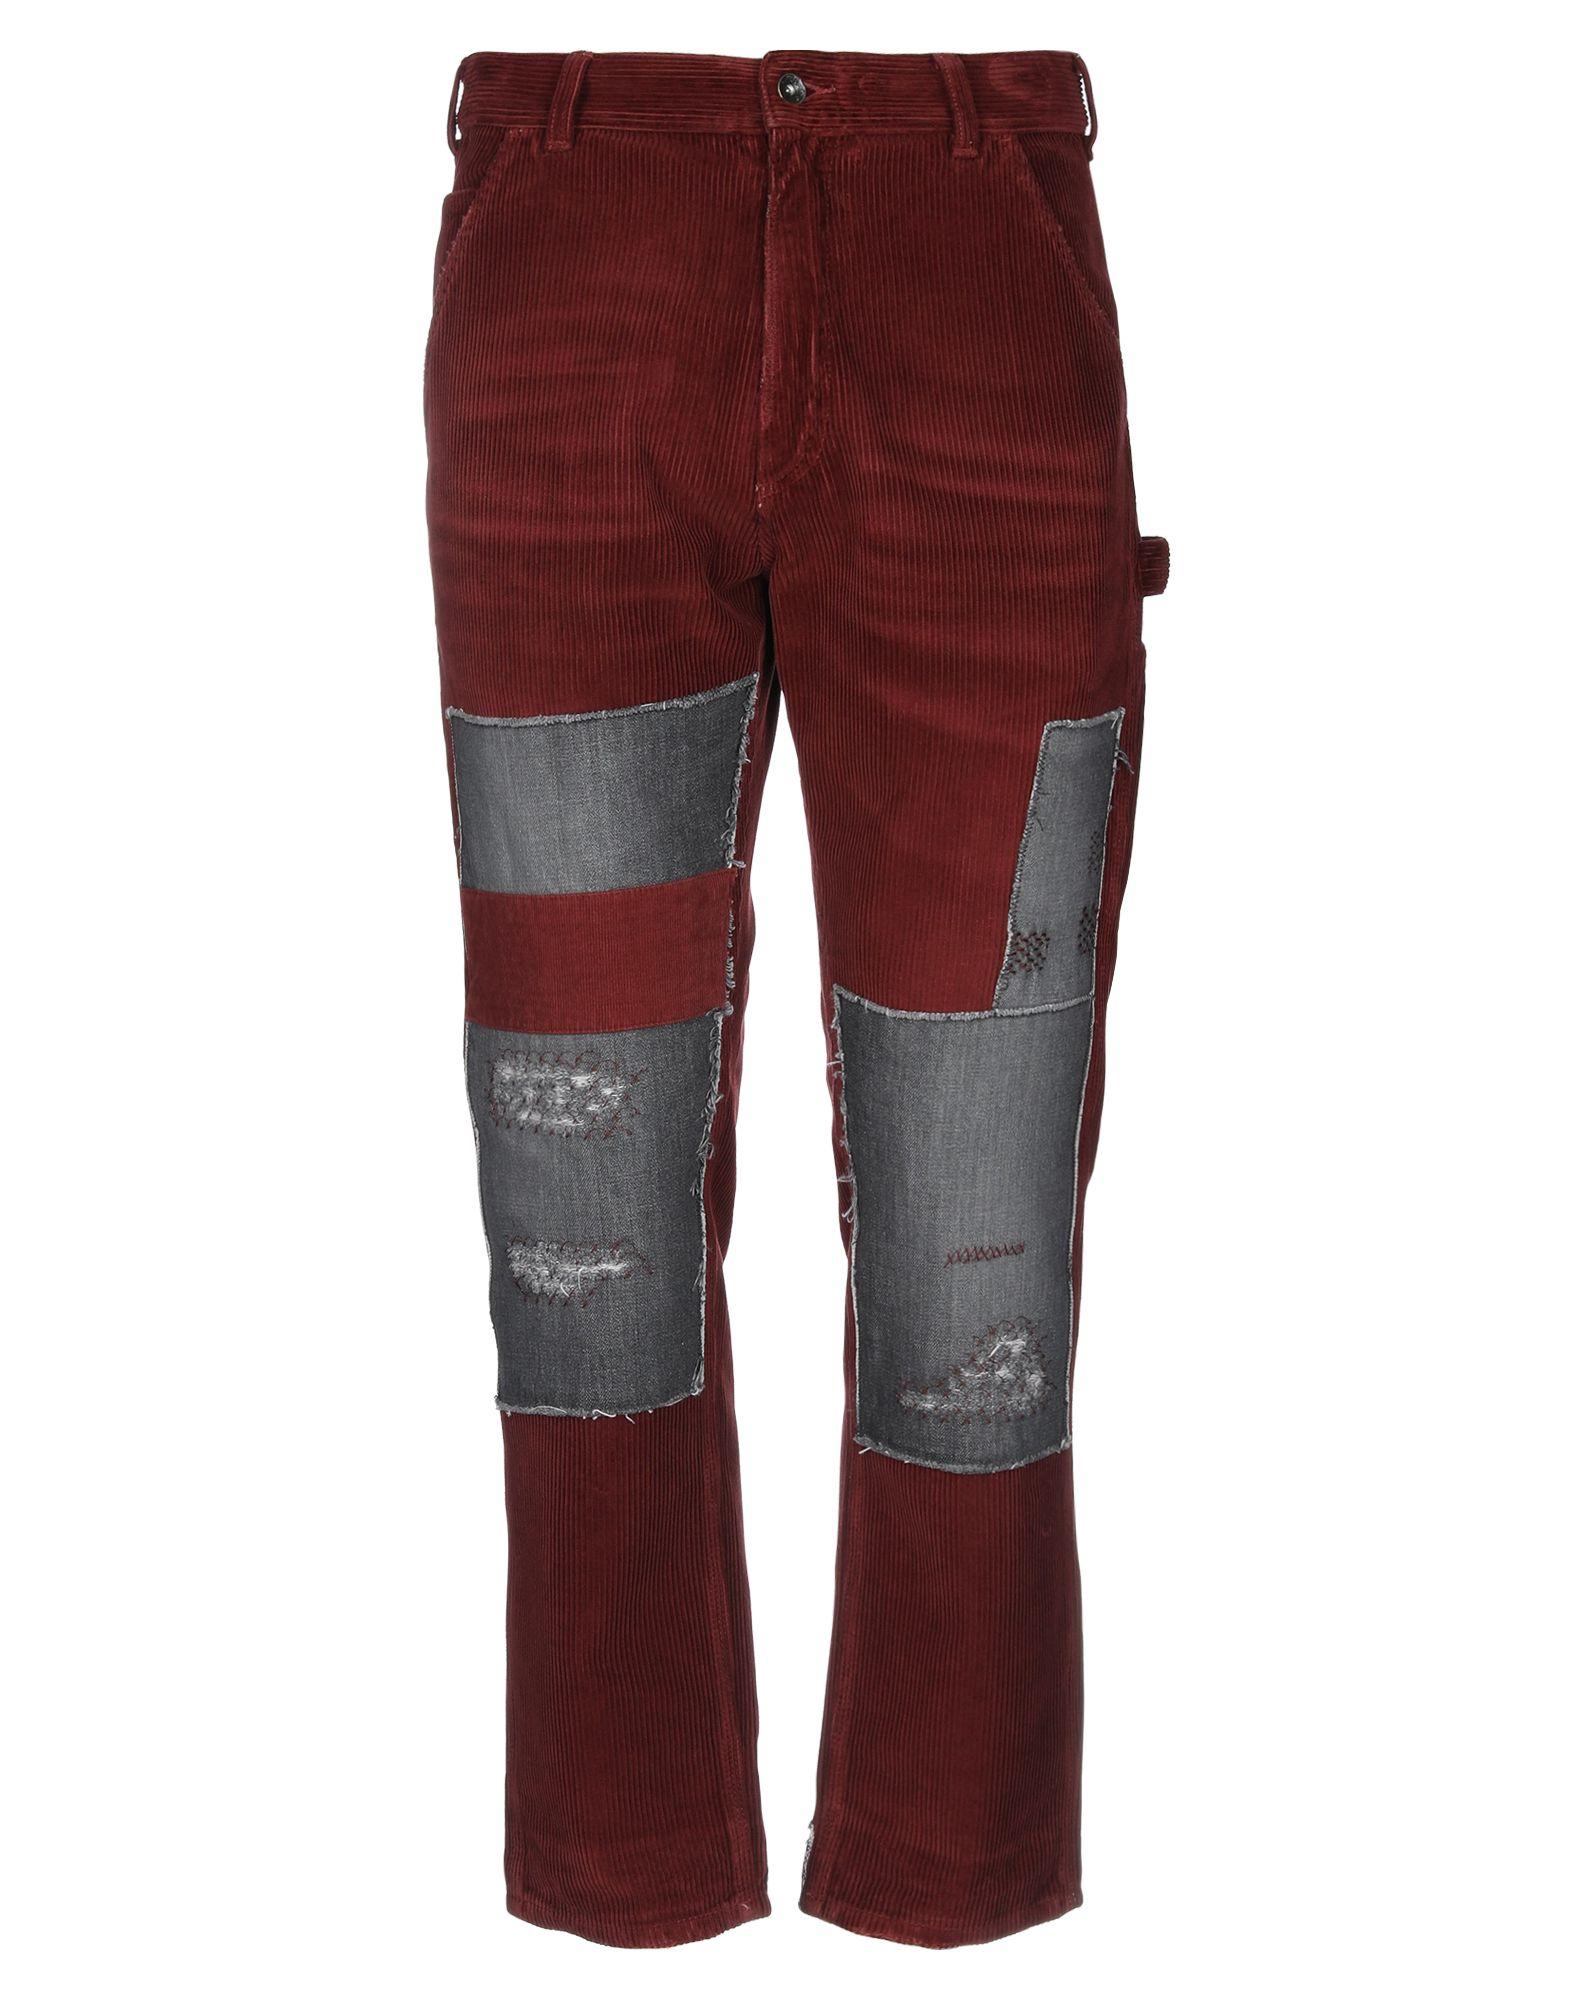 PRPS Velvet Casual Pants in Brick Red (Red) for Men - Lyst